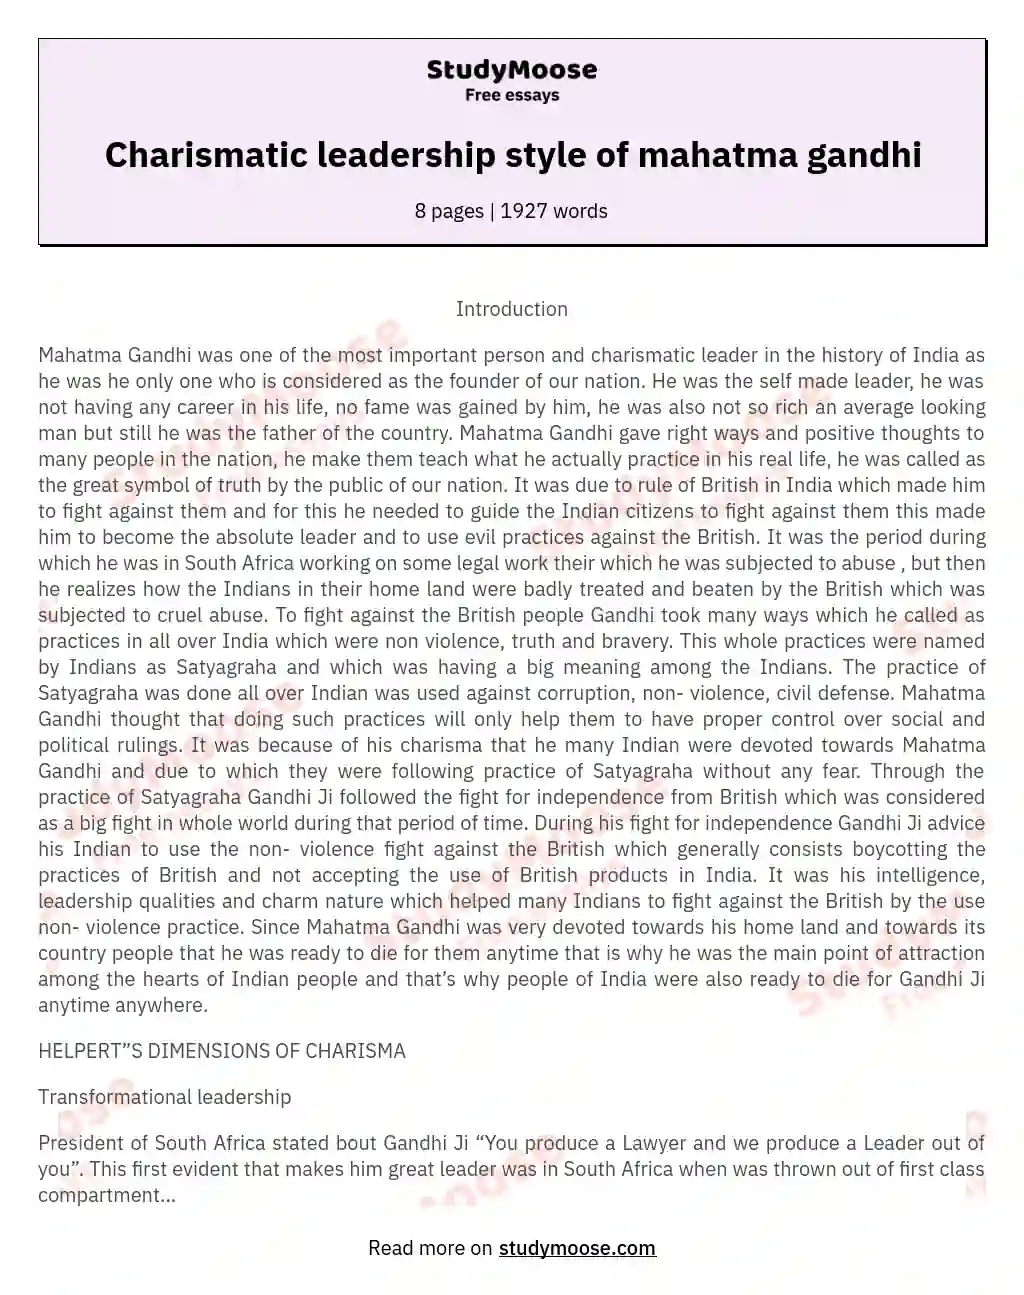 Charismatic leadership style of mahatma gandhi essay